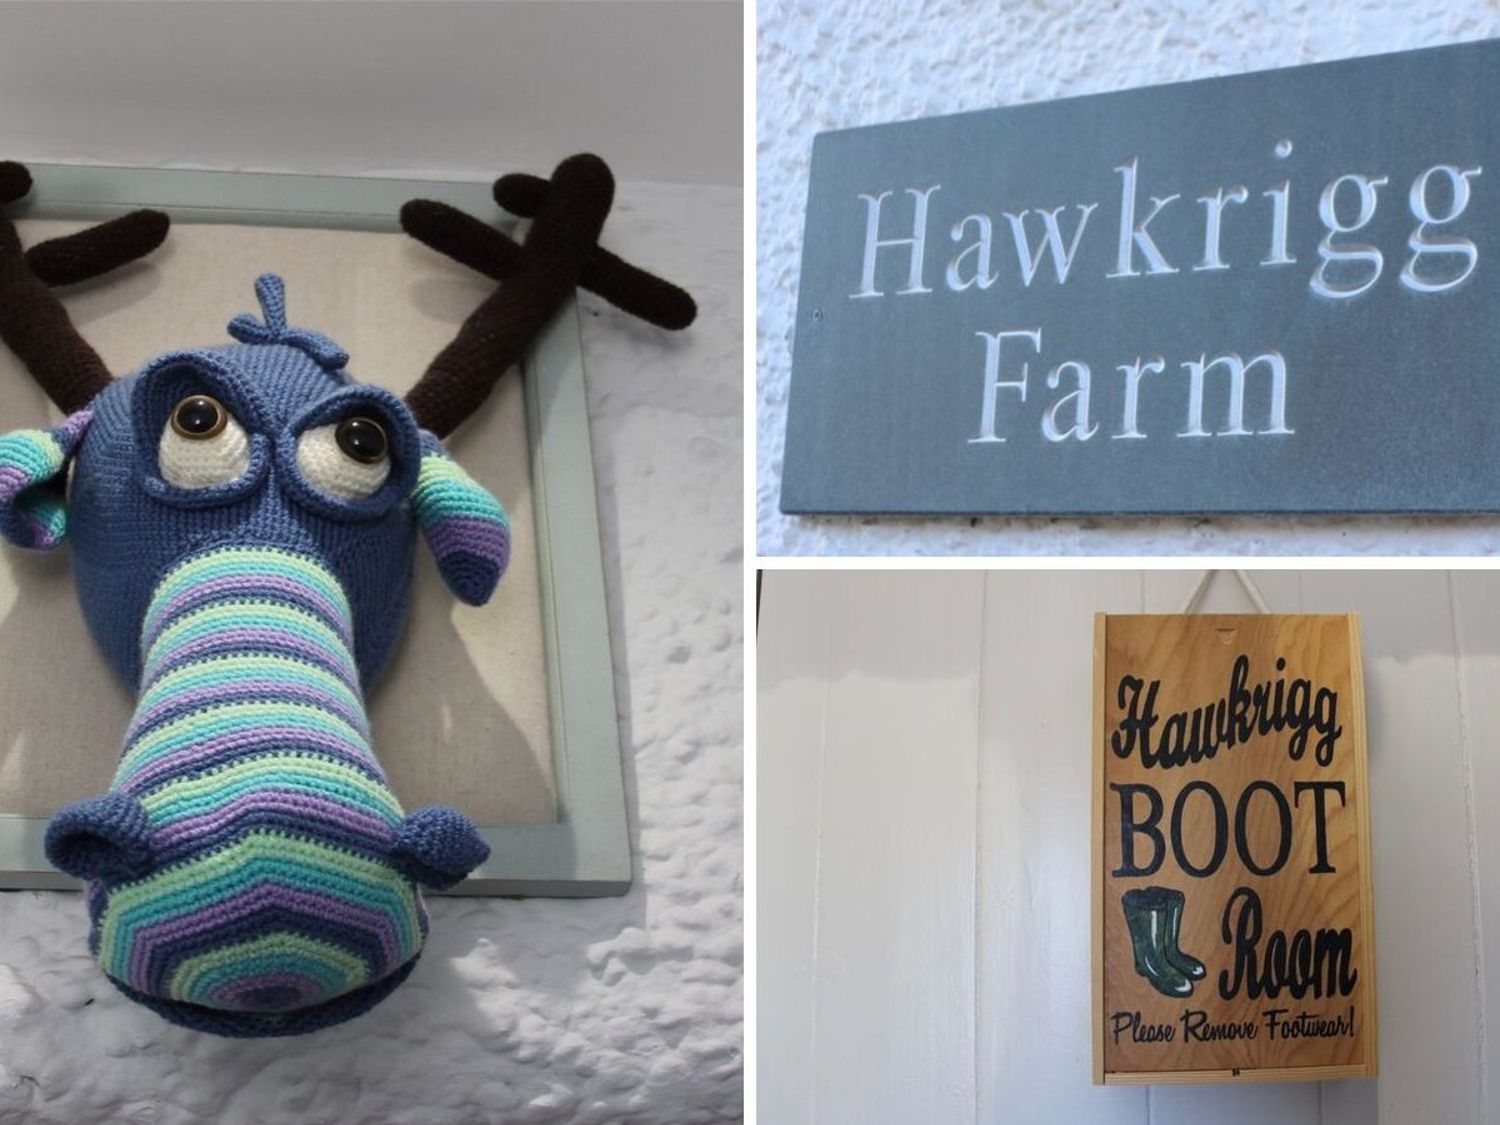 Hawkrigg Farm, Hawkshead, Cumbria